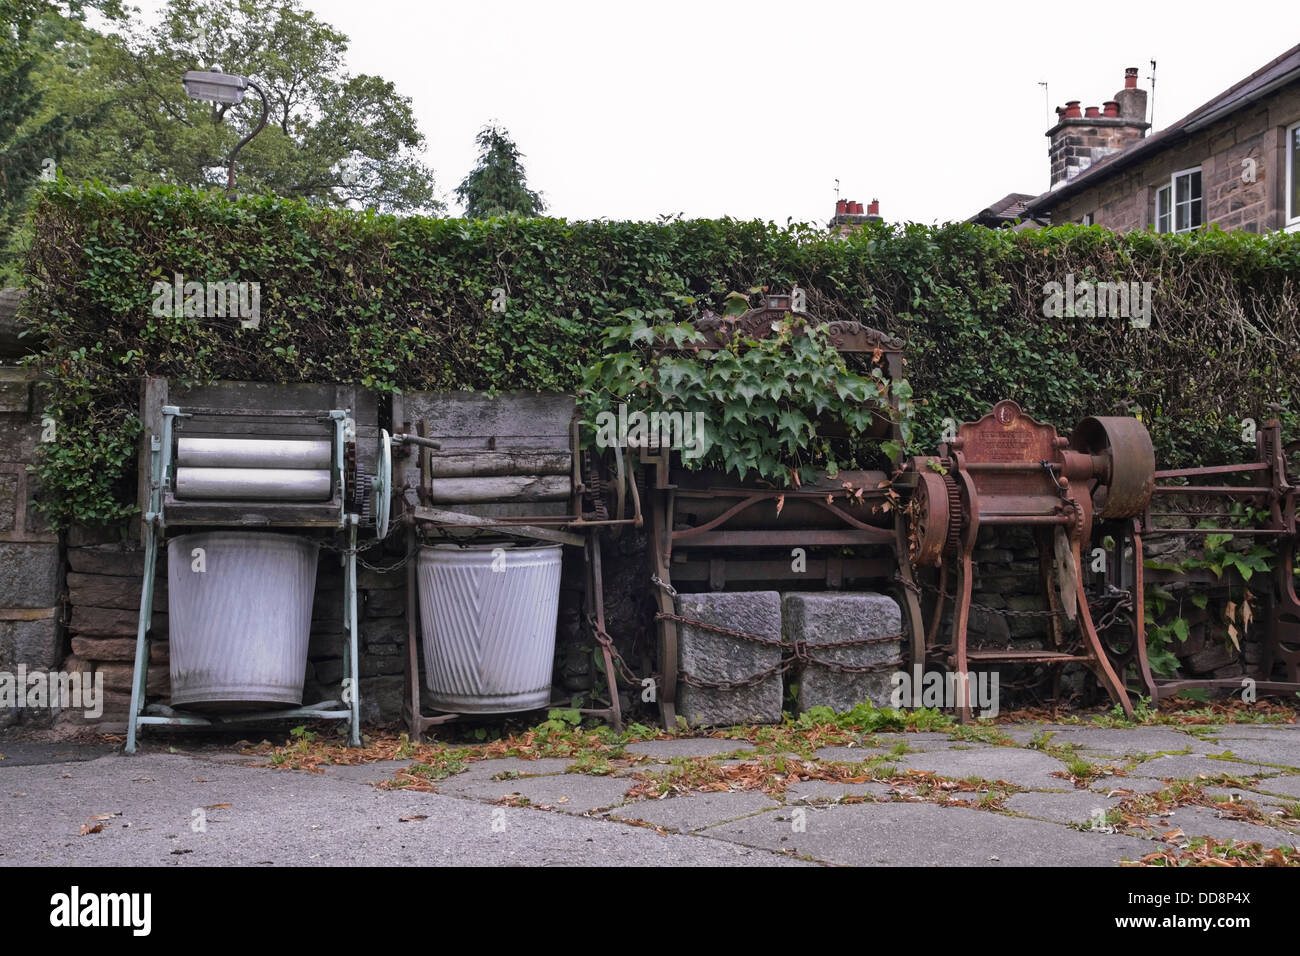 old fashioned vintage laundry mangles / machinery United kingdom Stock Photo